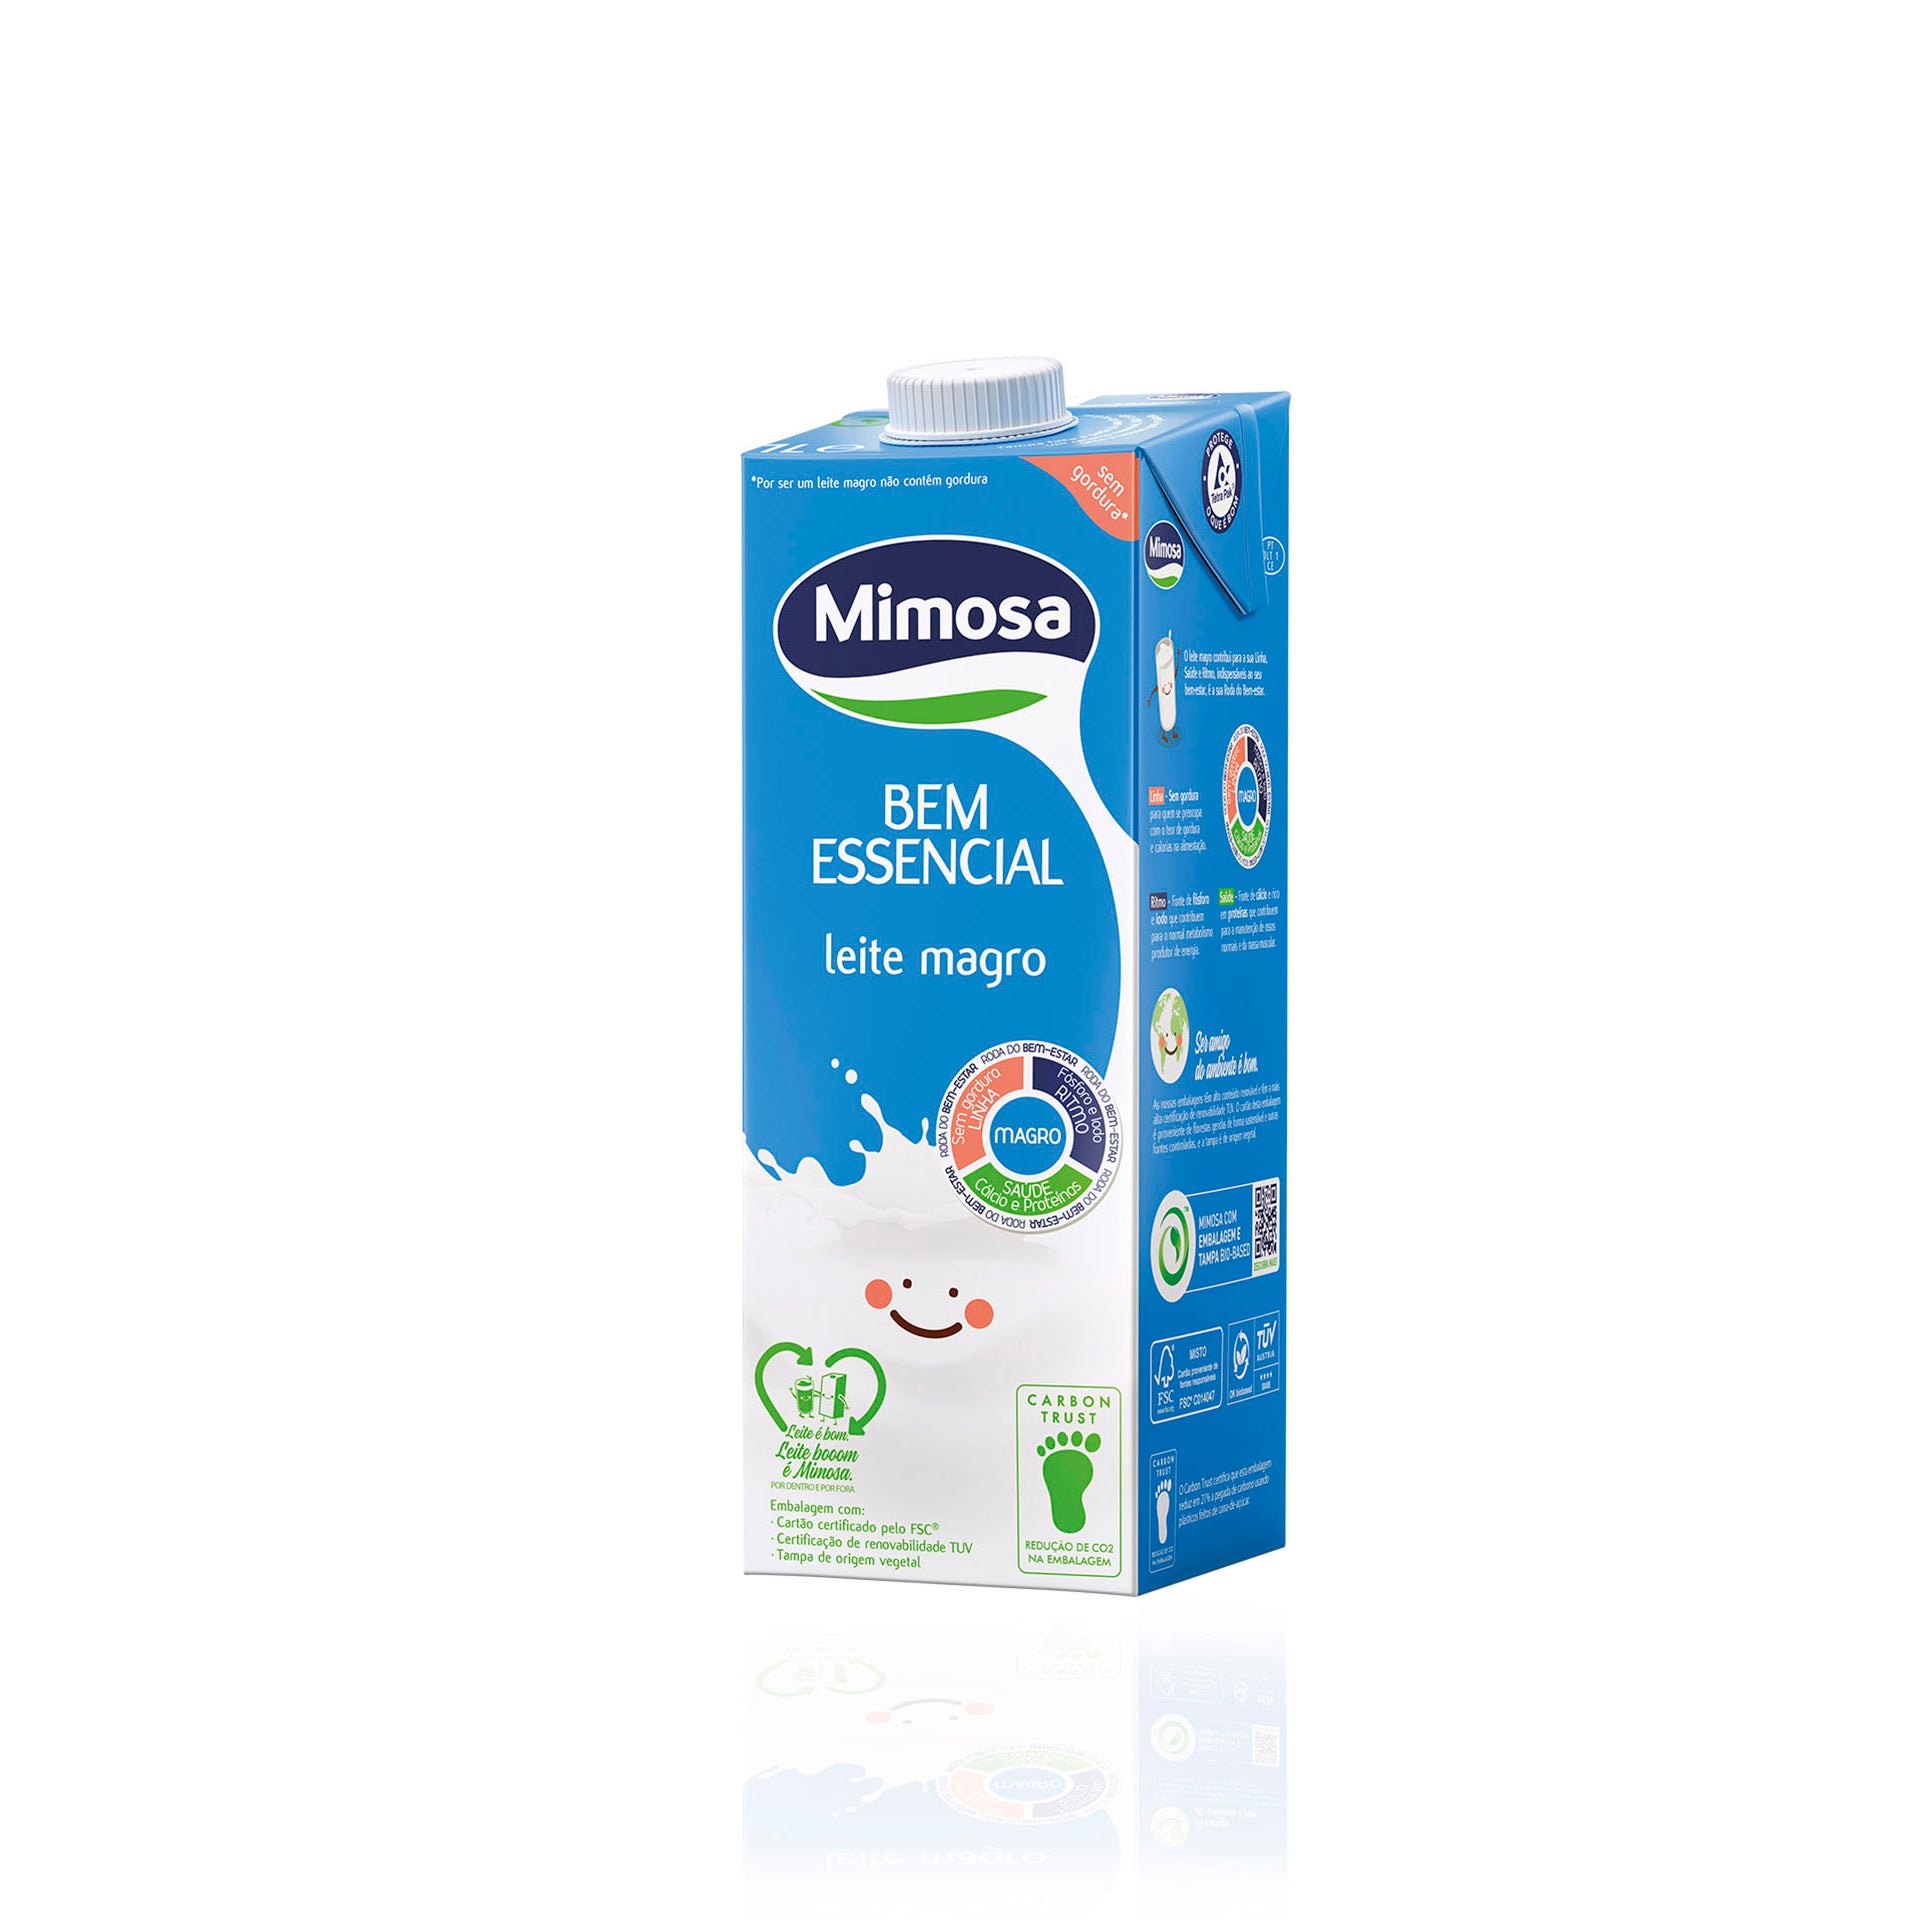 Mimosa Bem Essencial Leite Magro UHT 1 L